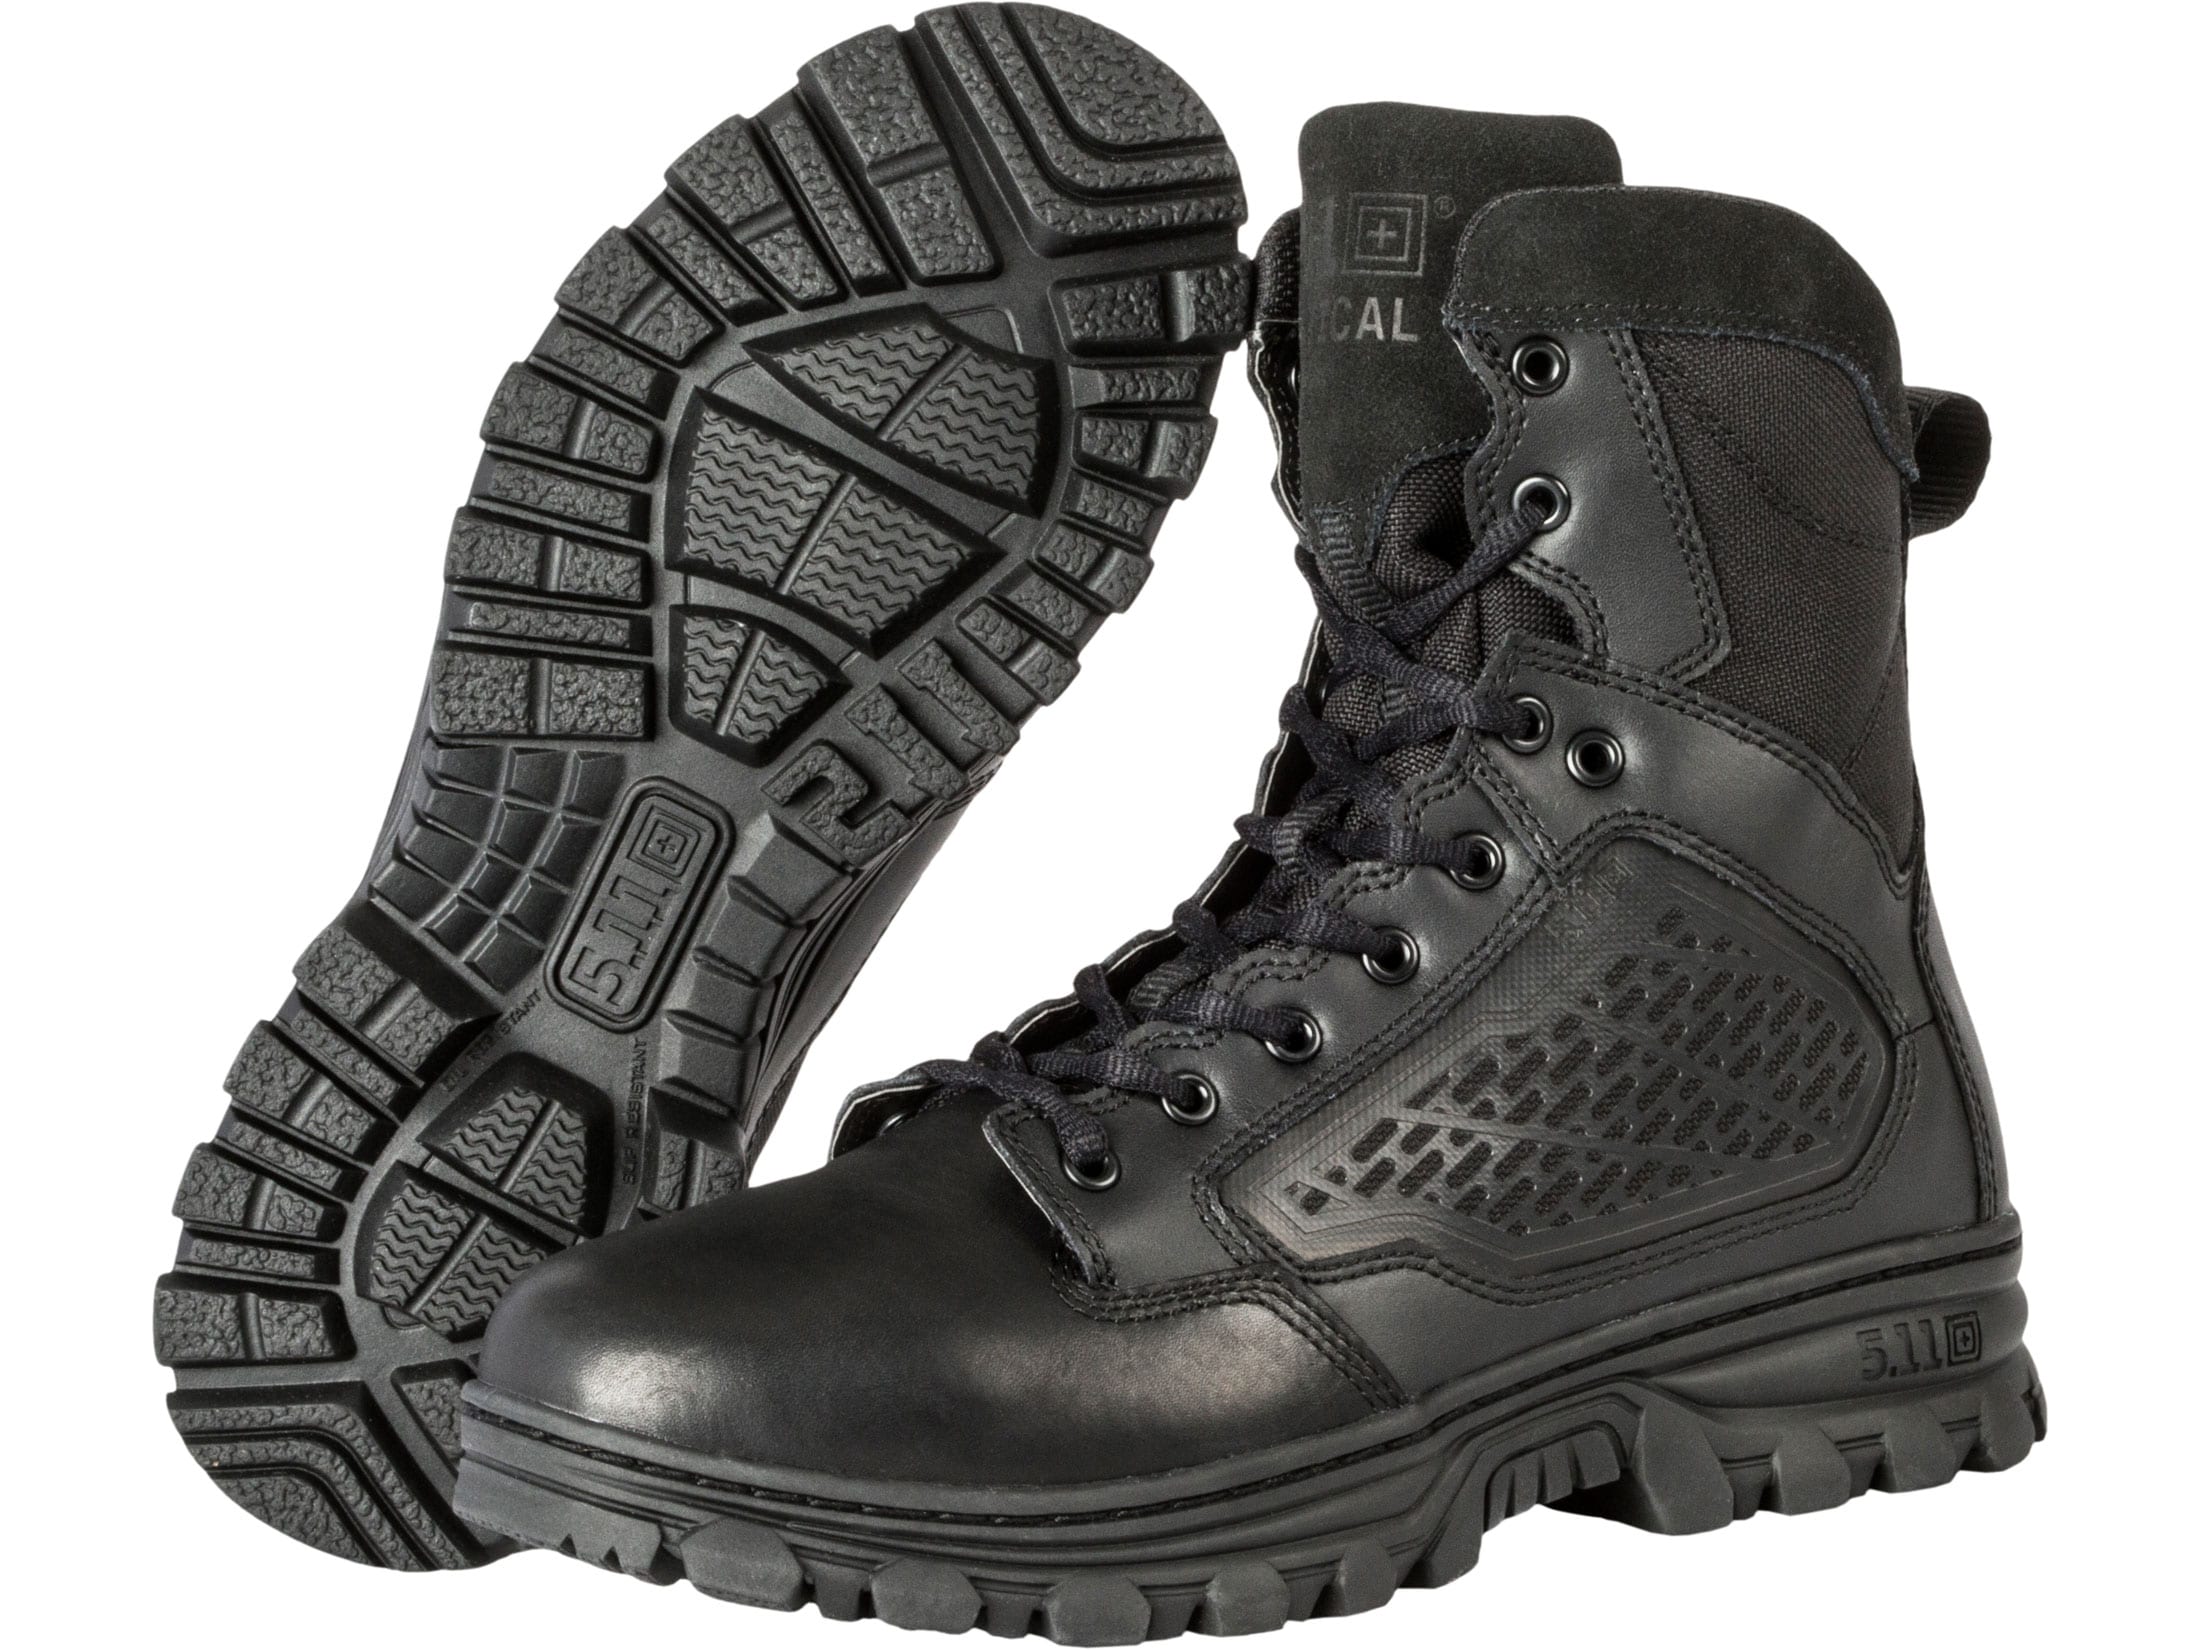 5.11 EVO 6 Side Zip Tactical Boots Leather Nylon Black Men's 8.5 D